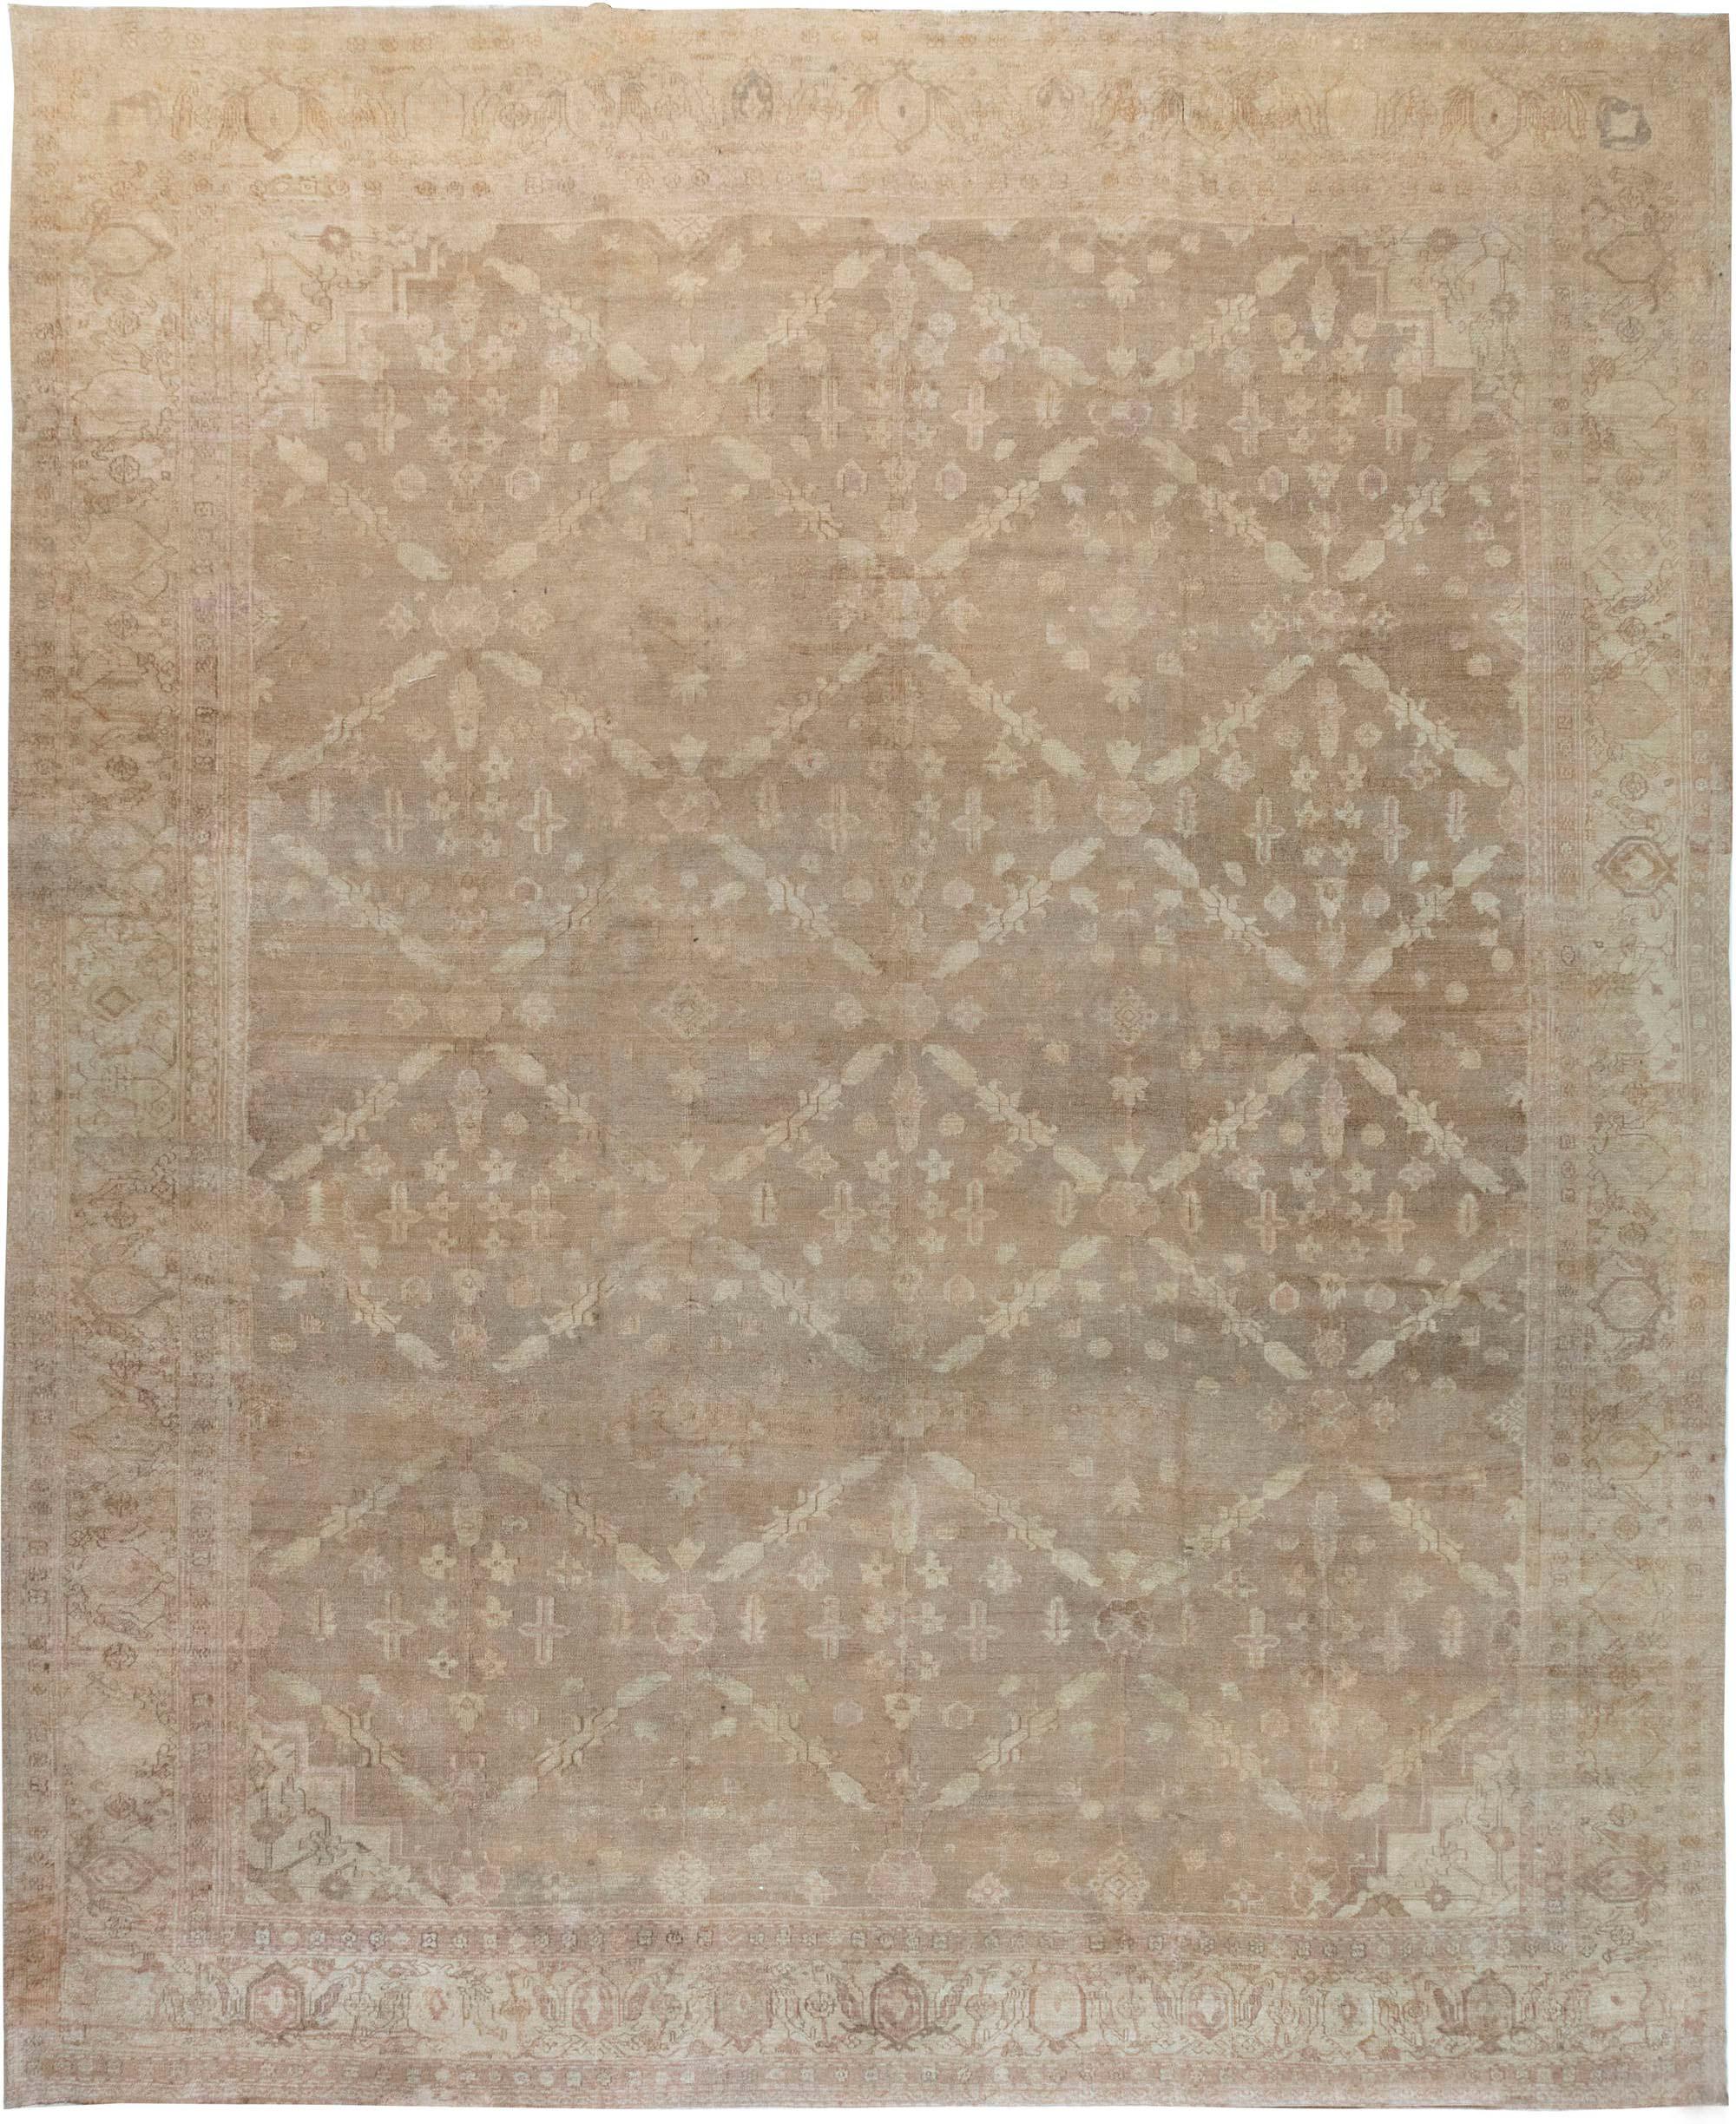 Large Indian Amritsar Brown Handmade Wool Rug